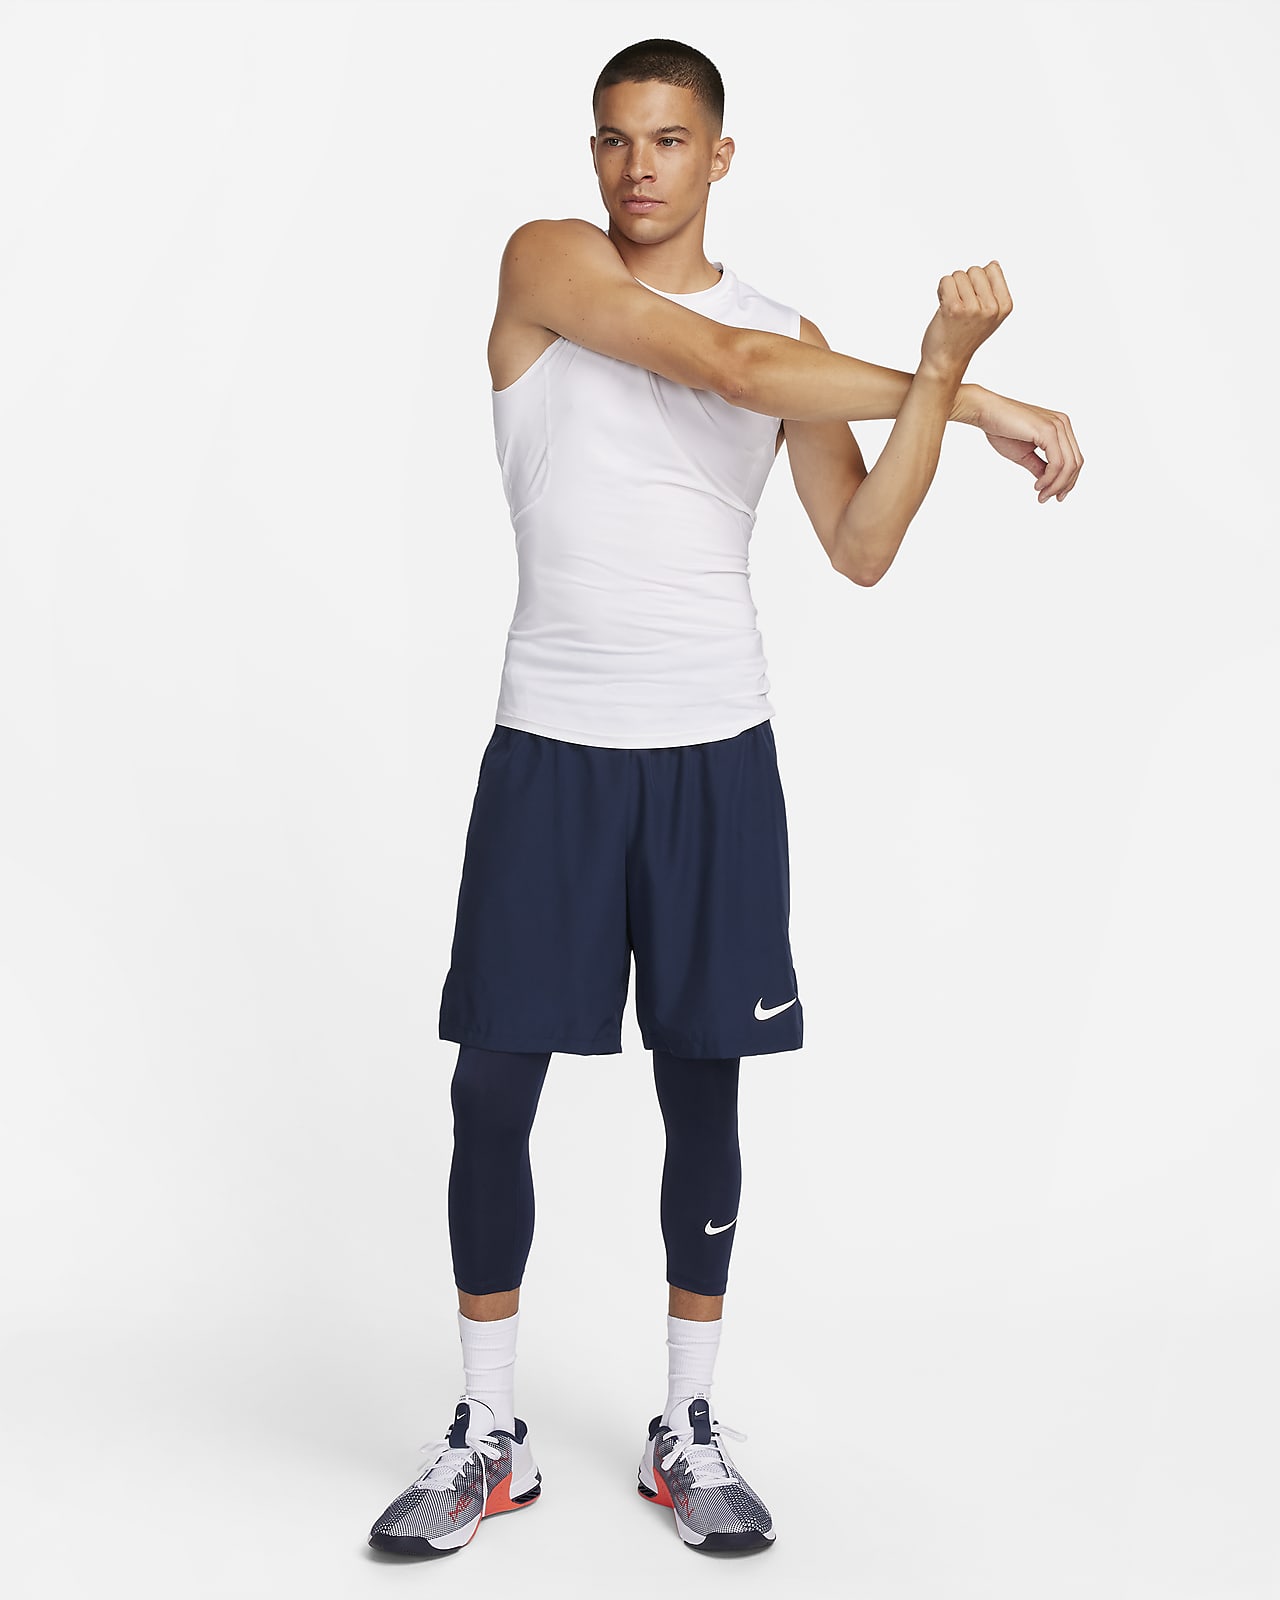 Men's Nike Pro Elite Shiny 3/4 Running Tights Compression Pants